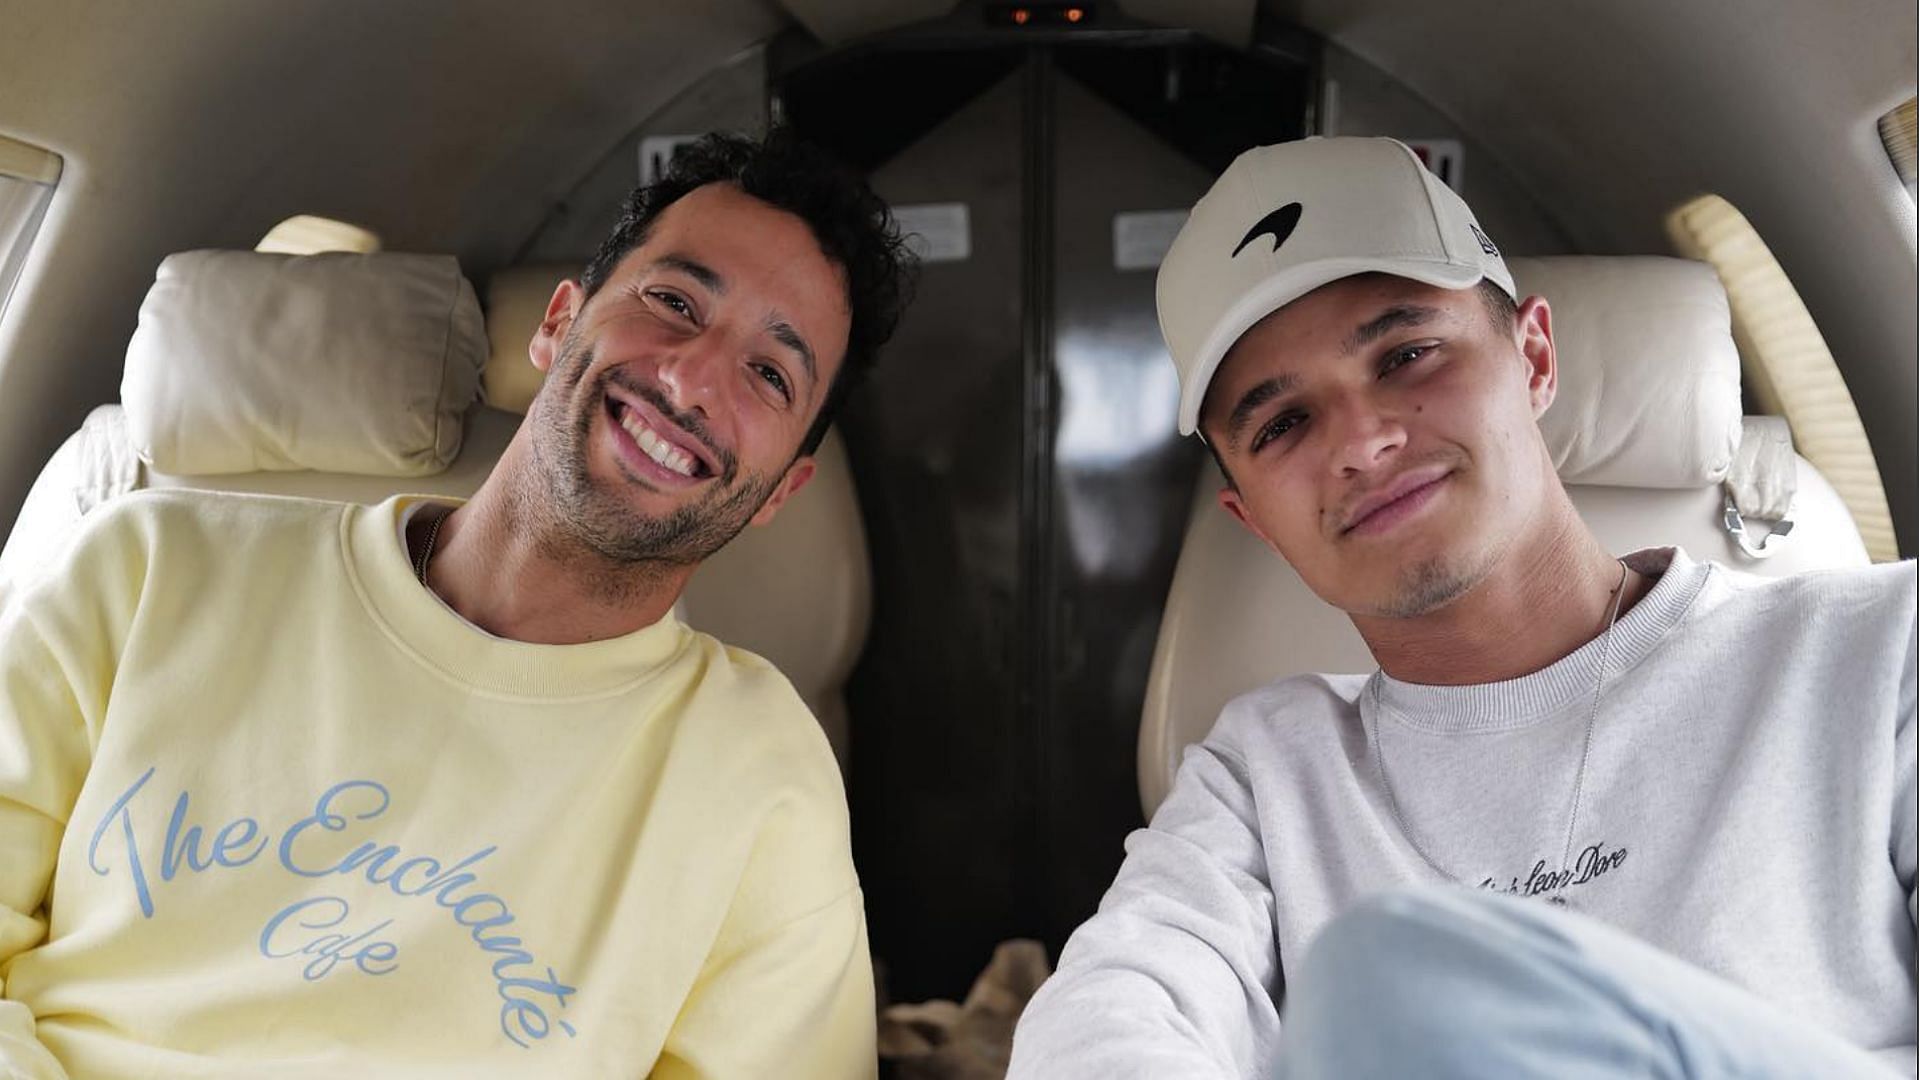 Daniel Ricciardo and Lando Norris flying together to Hungary ahead of the 2023 F1 Hungarian Grand Prix (Image via Instagram/danielricciardo)